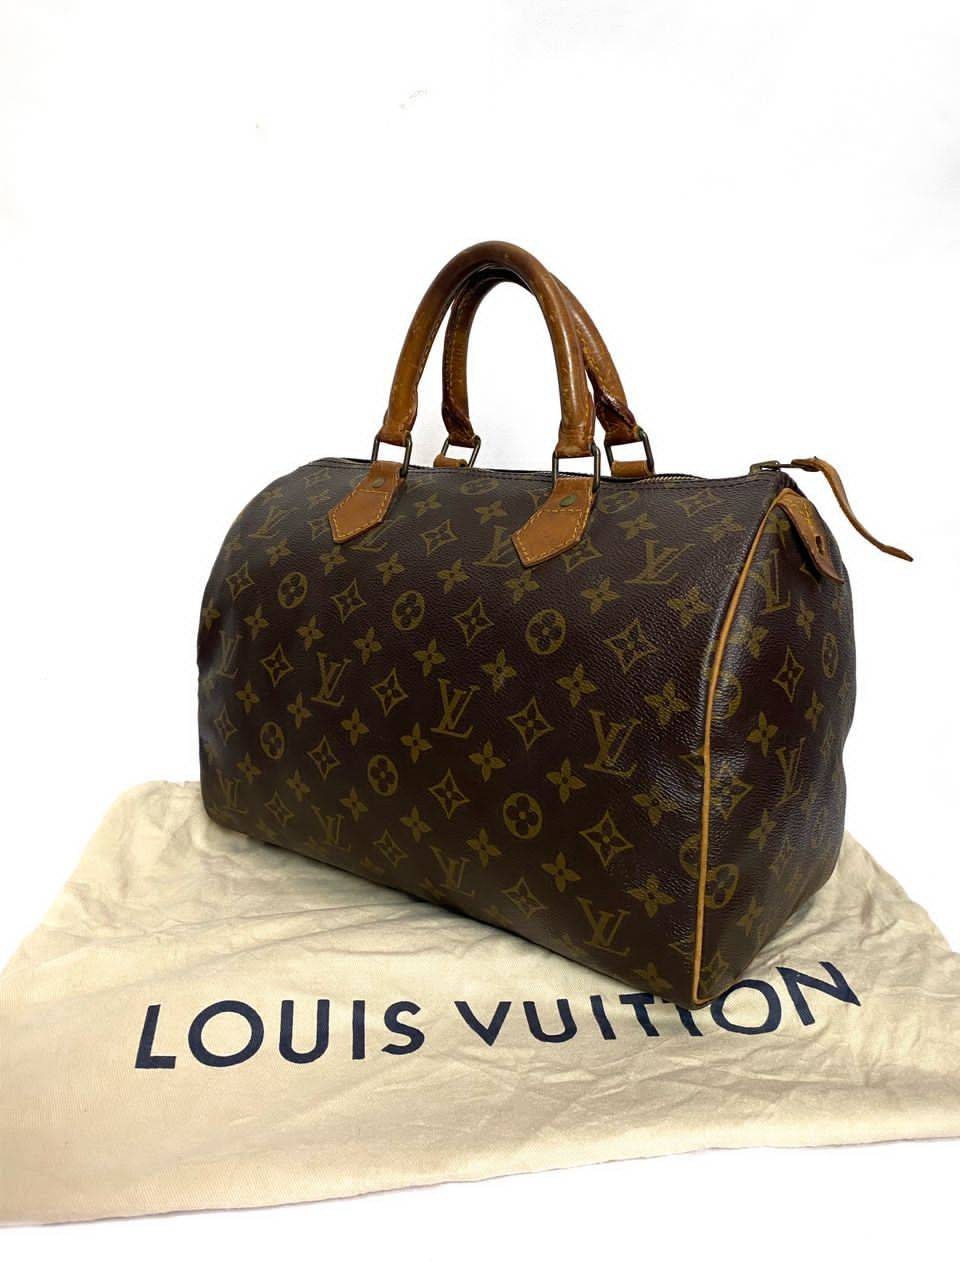 Vintage Authentic Louis Vuitton Speedy 30 Monogram Bag Made in 